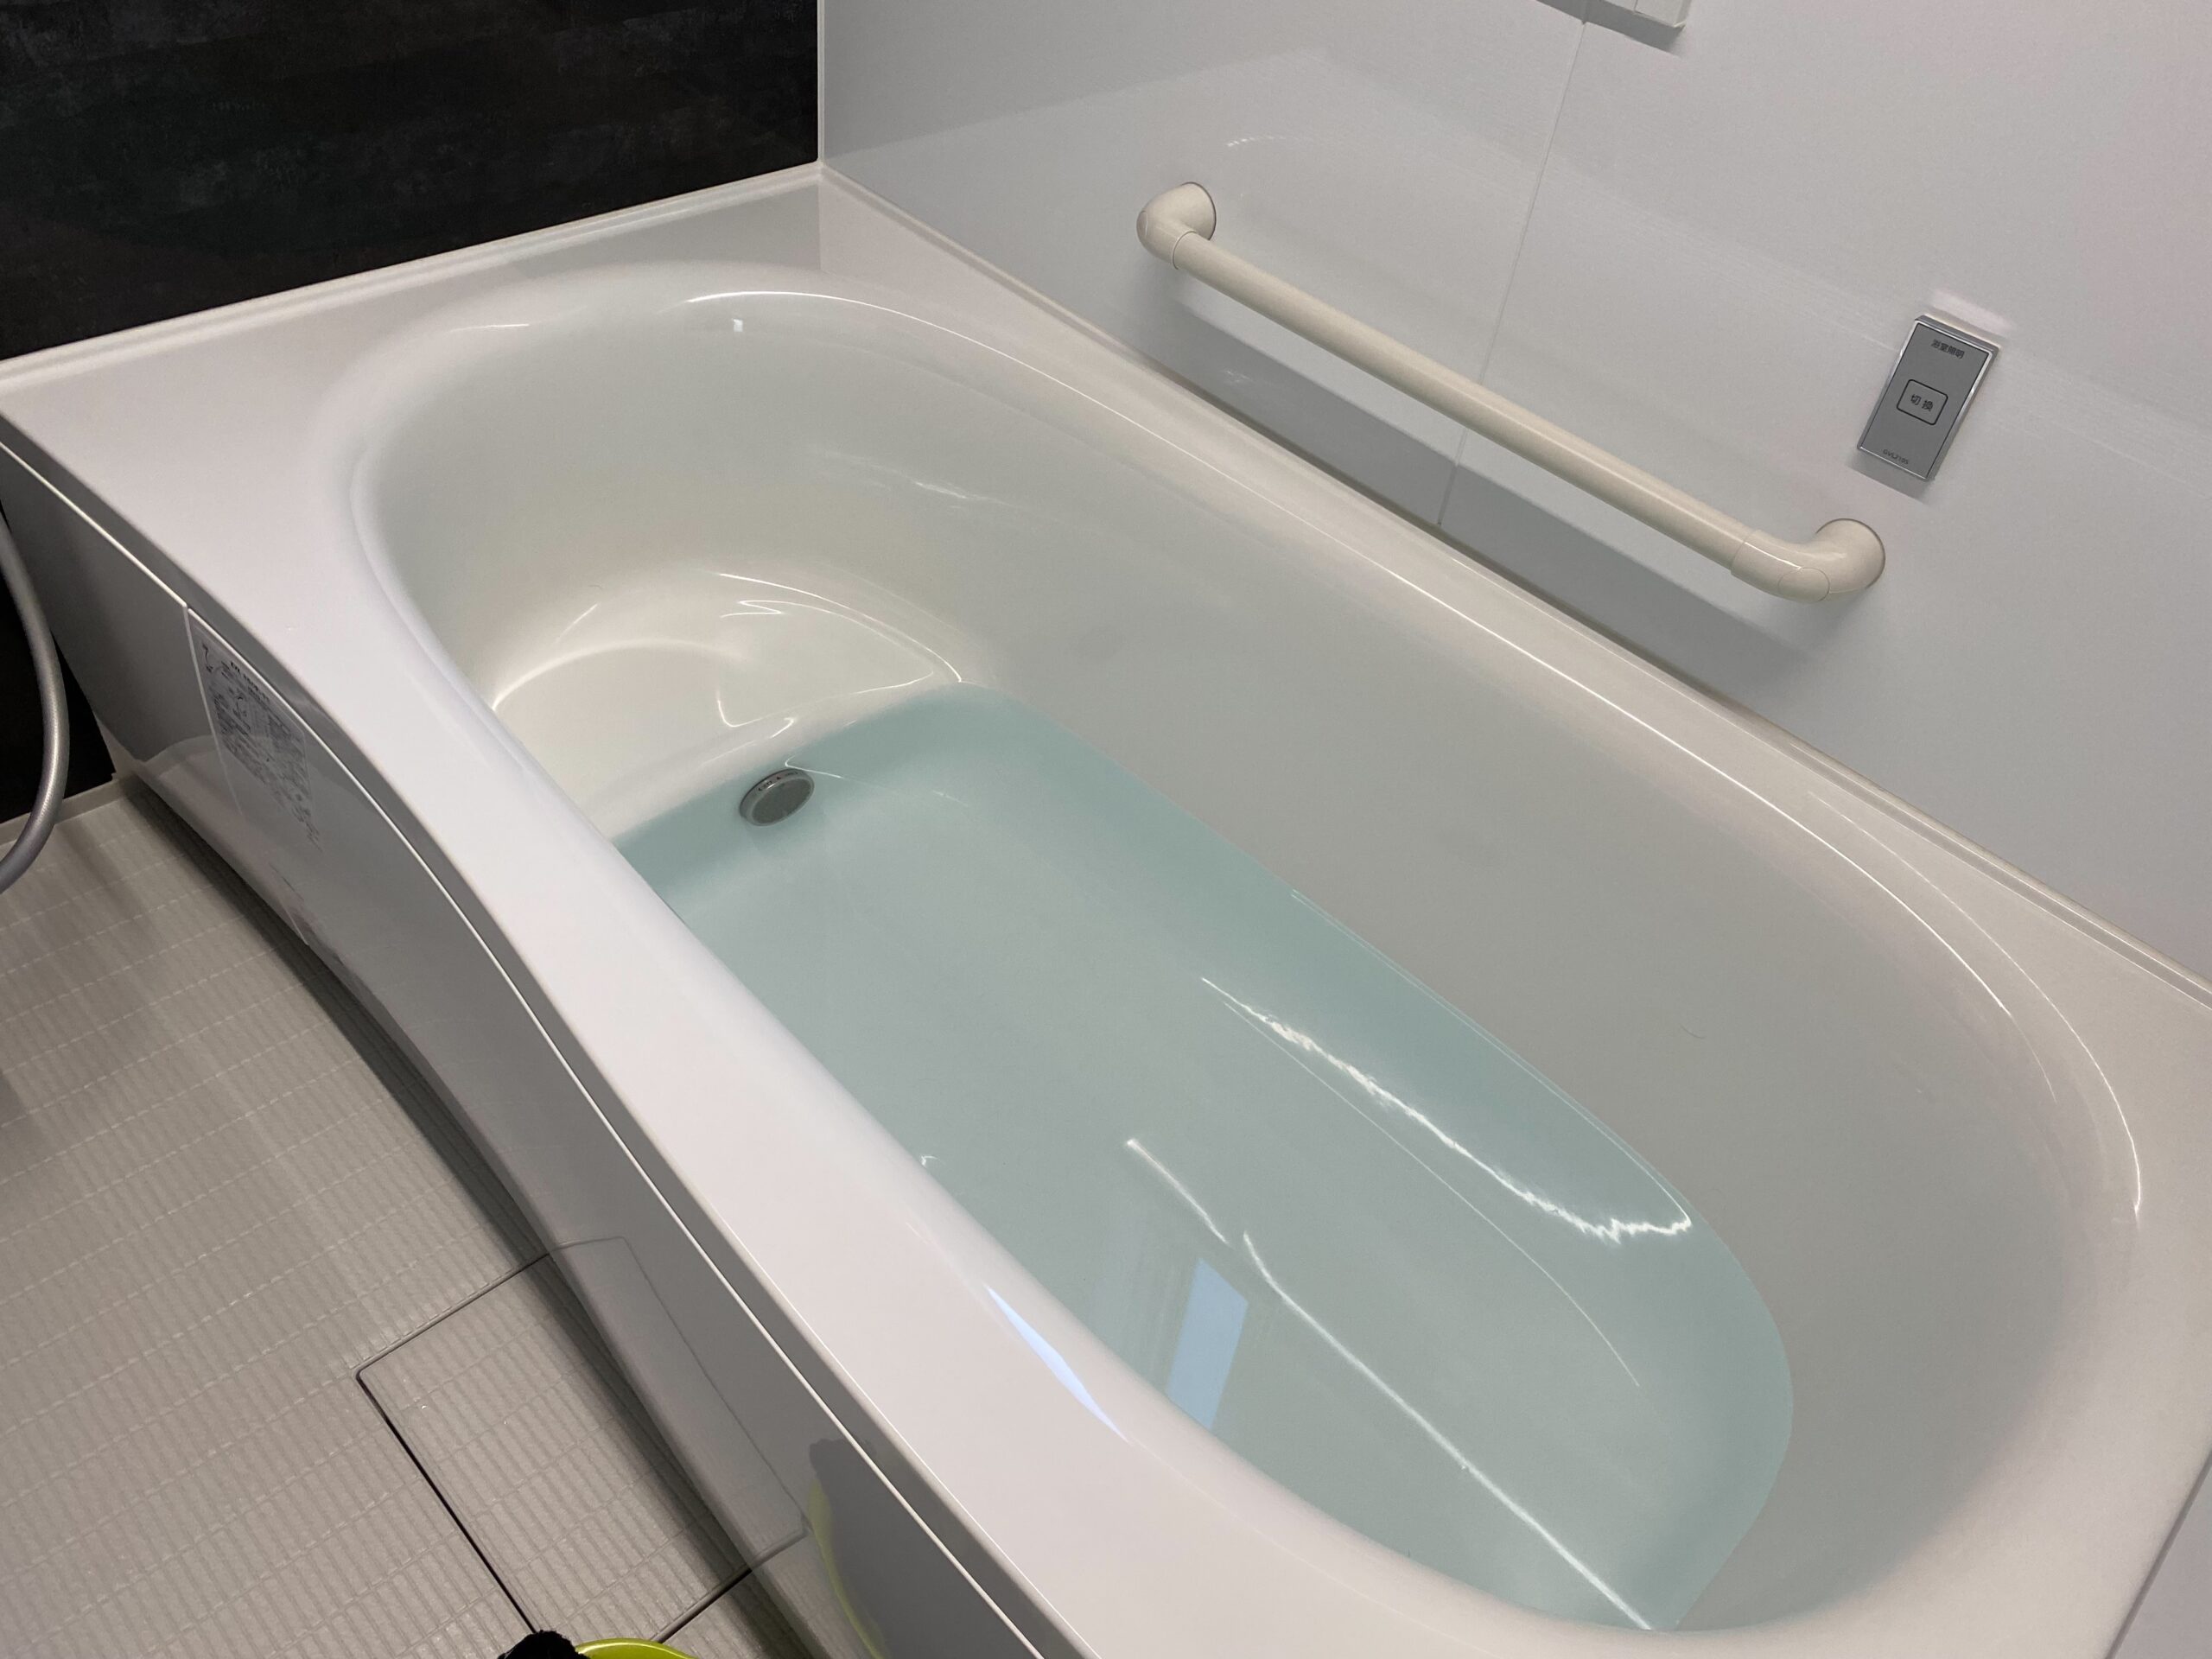 Panasonicお風呂
オフローラ
浴槽